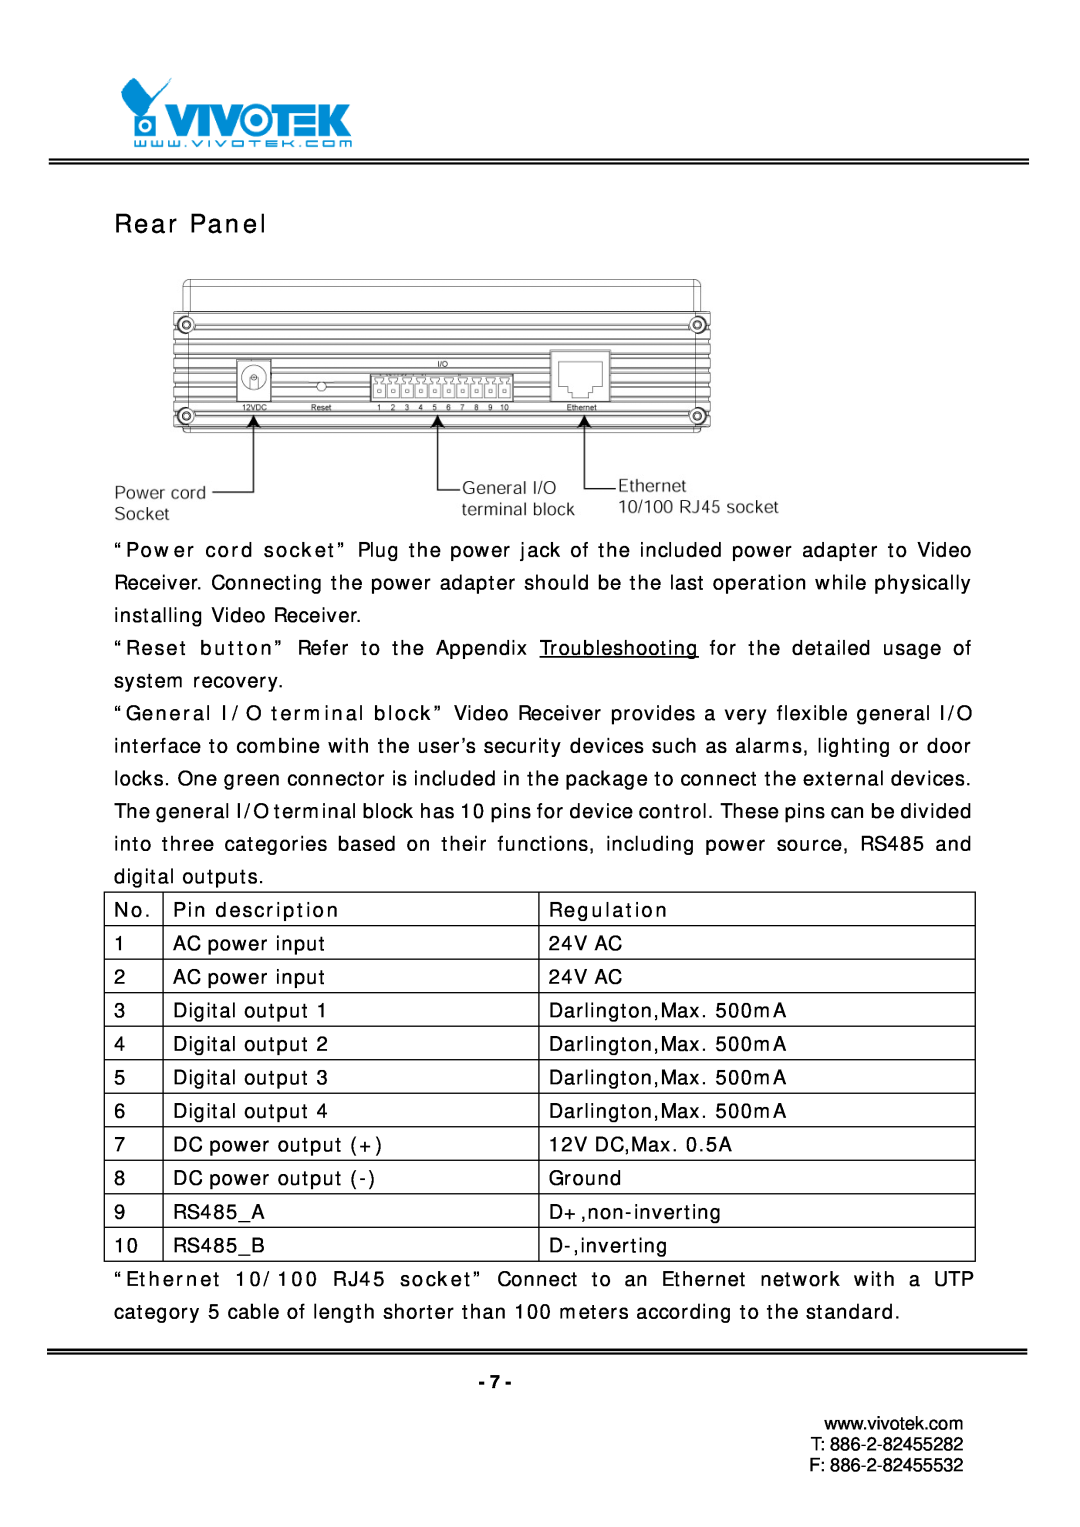 Vivotek RX7101 manual Rear Panel, Pin description, Regulation 